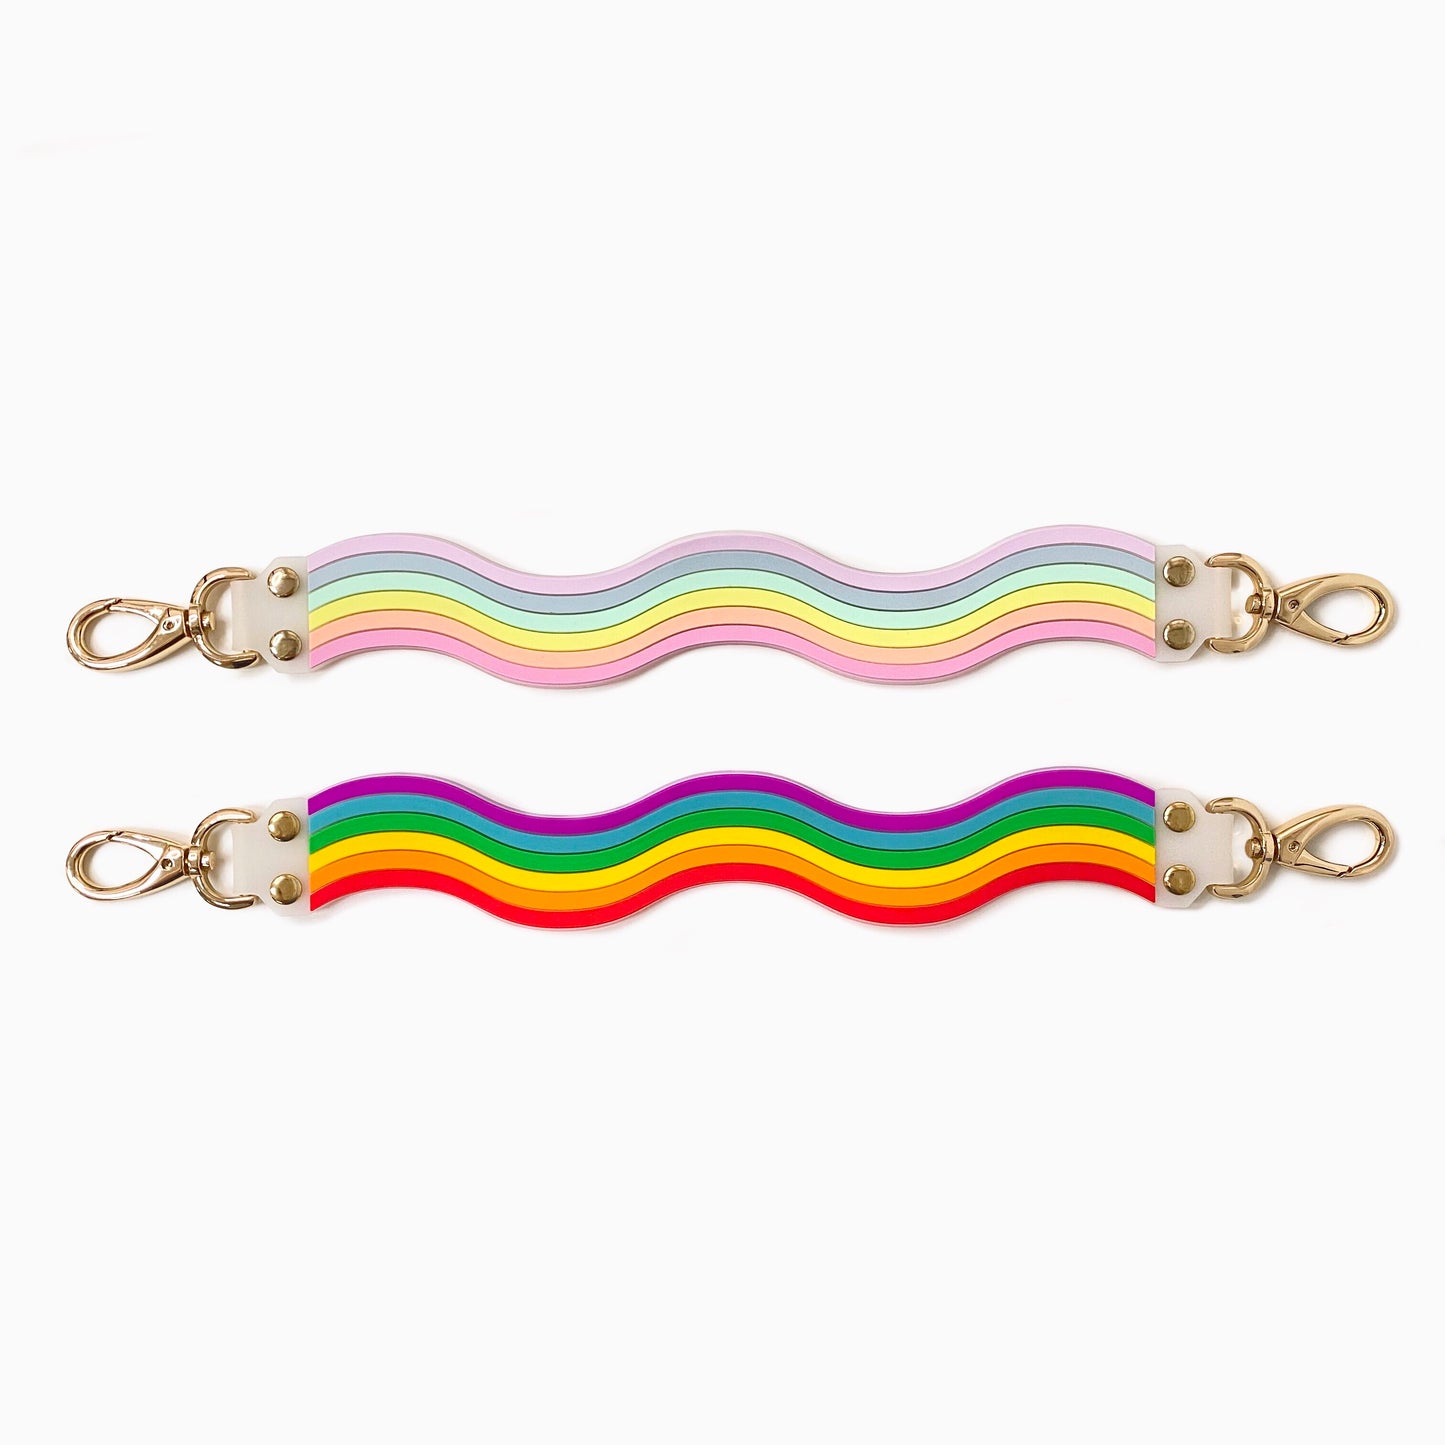 Happy Strap (Short) - Pastel / Bright Rainbow Illusion